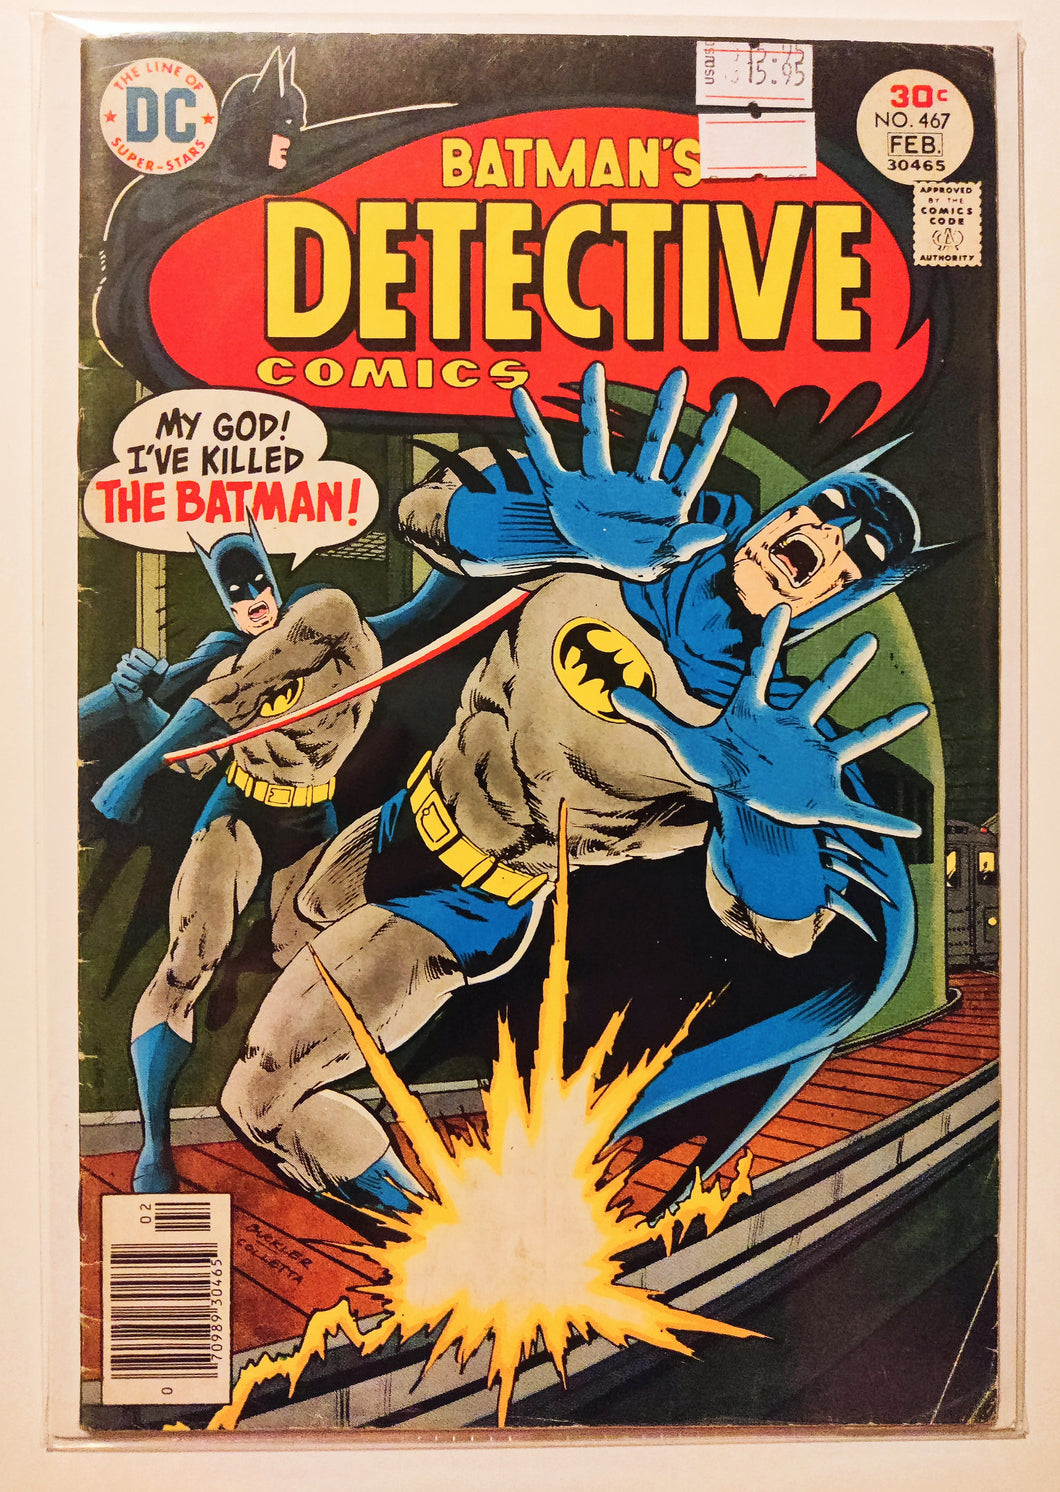 Detective Comics #467, February 1977